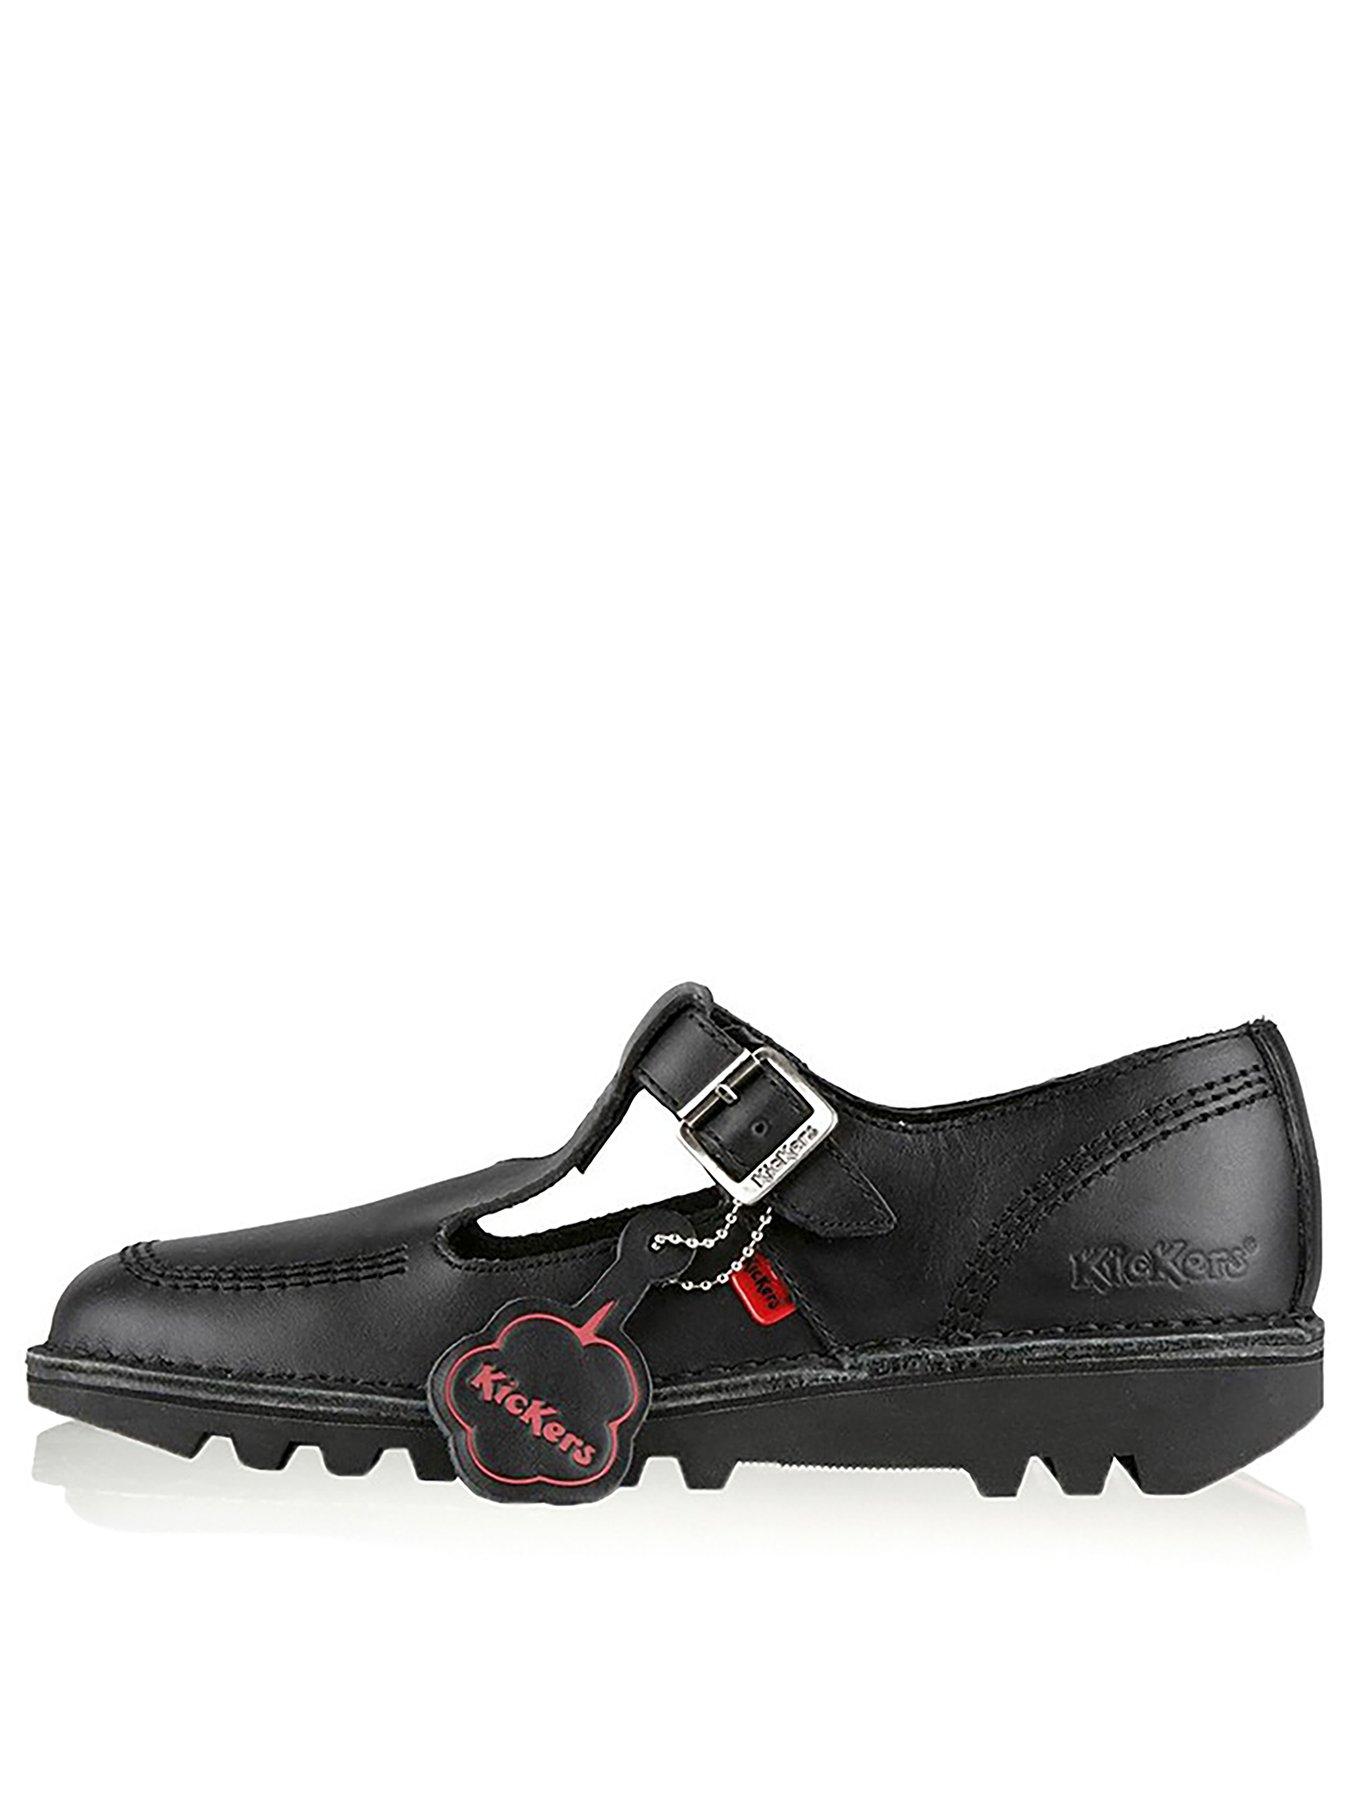 Kickers Kick Lo Womens Ladies Black Leather Shoes Size 4-8 